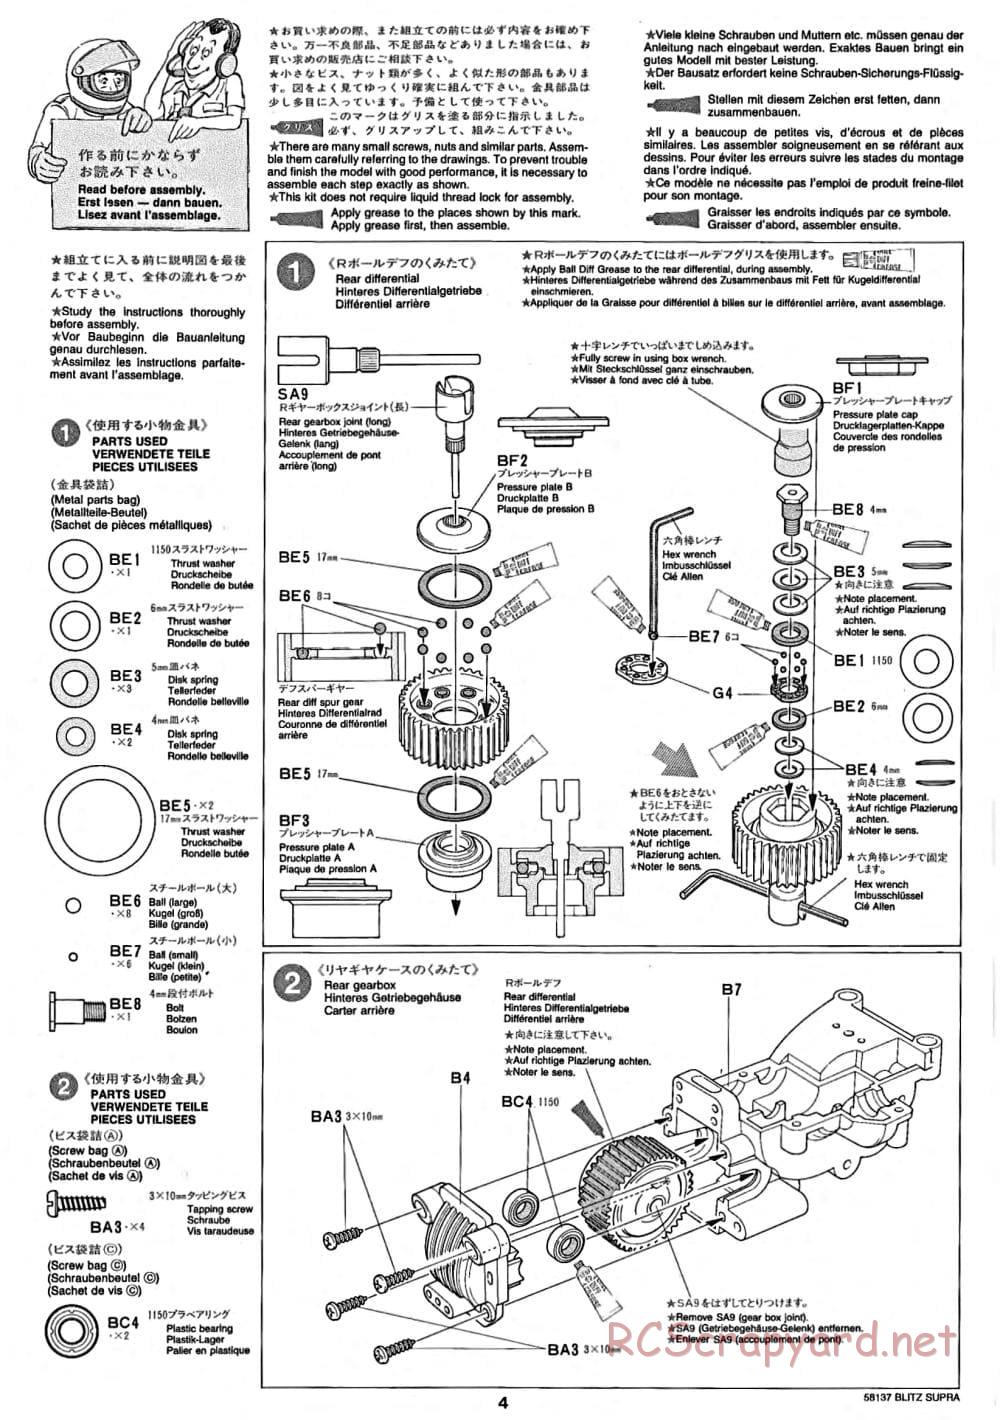 Tamiya - Blitz Toyota Supra Gr.N - TA-02 Chassis - Manual - Page 4